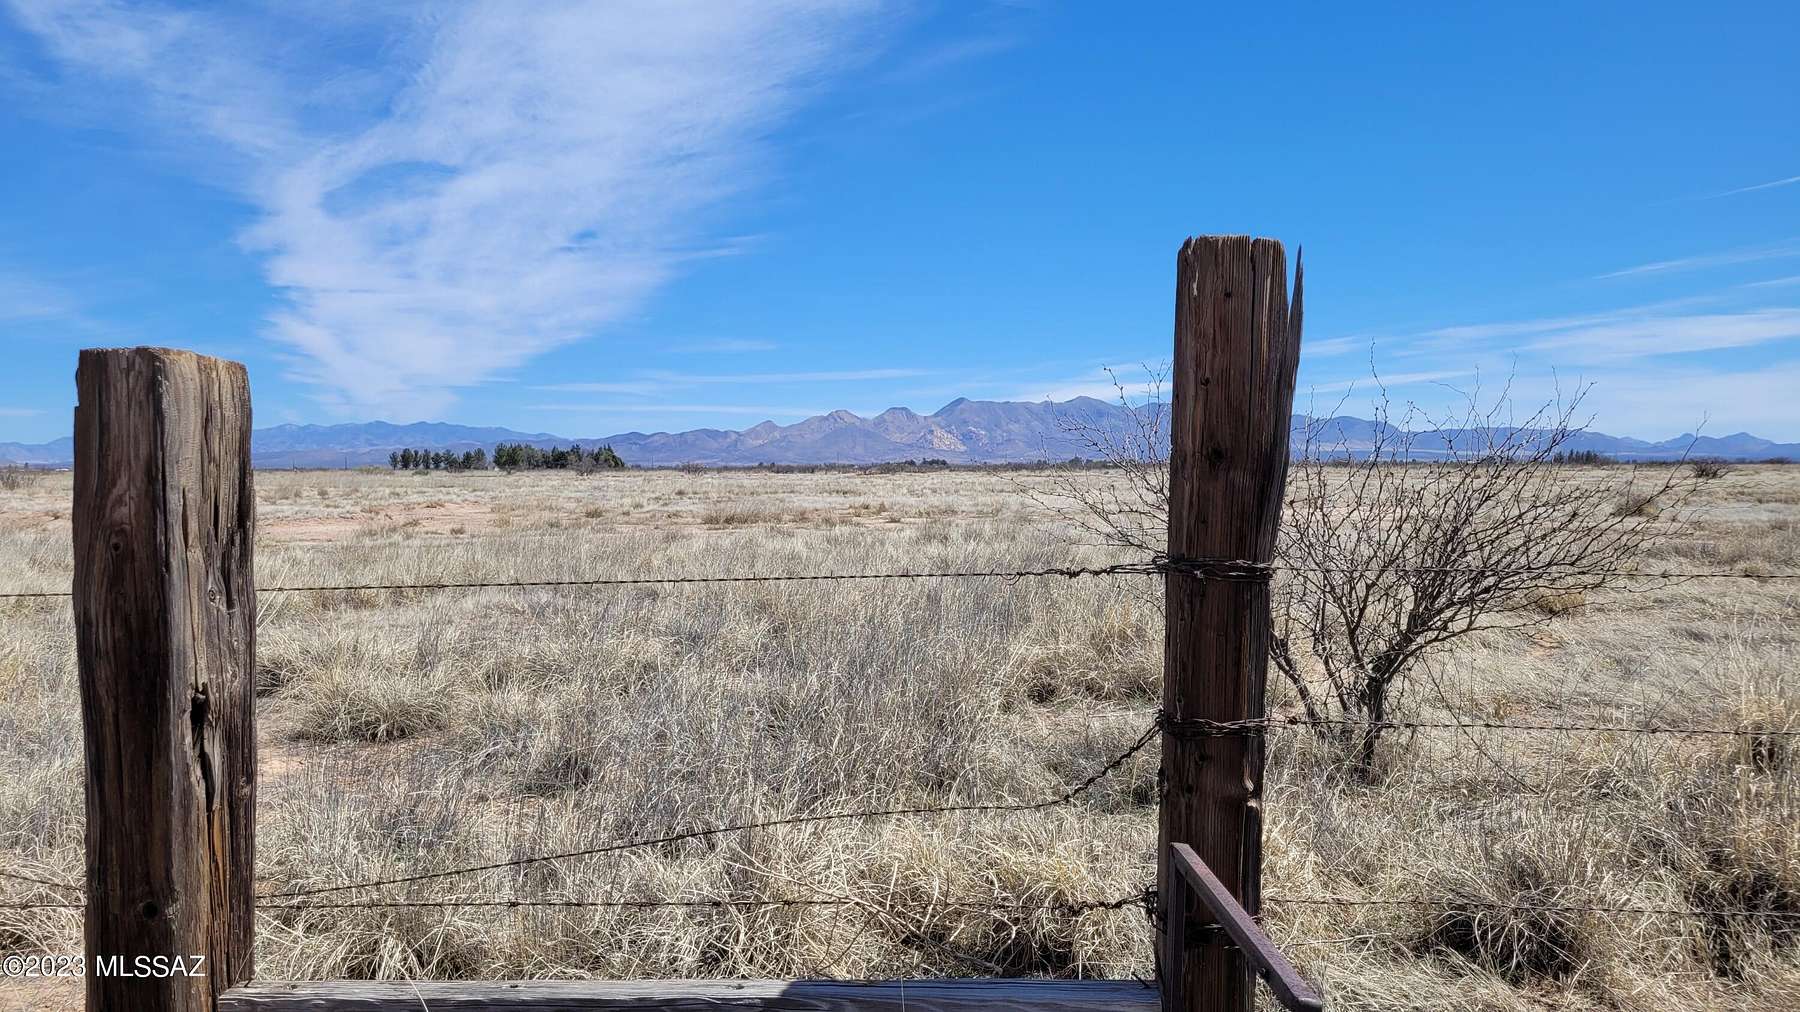 137 Acres of Agricultural Land for Sale in Elfrida, Arizona